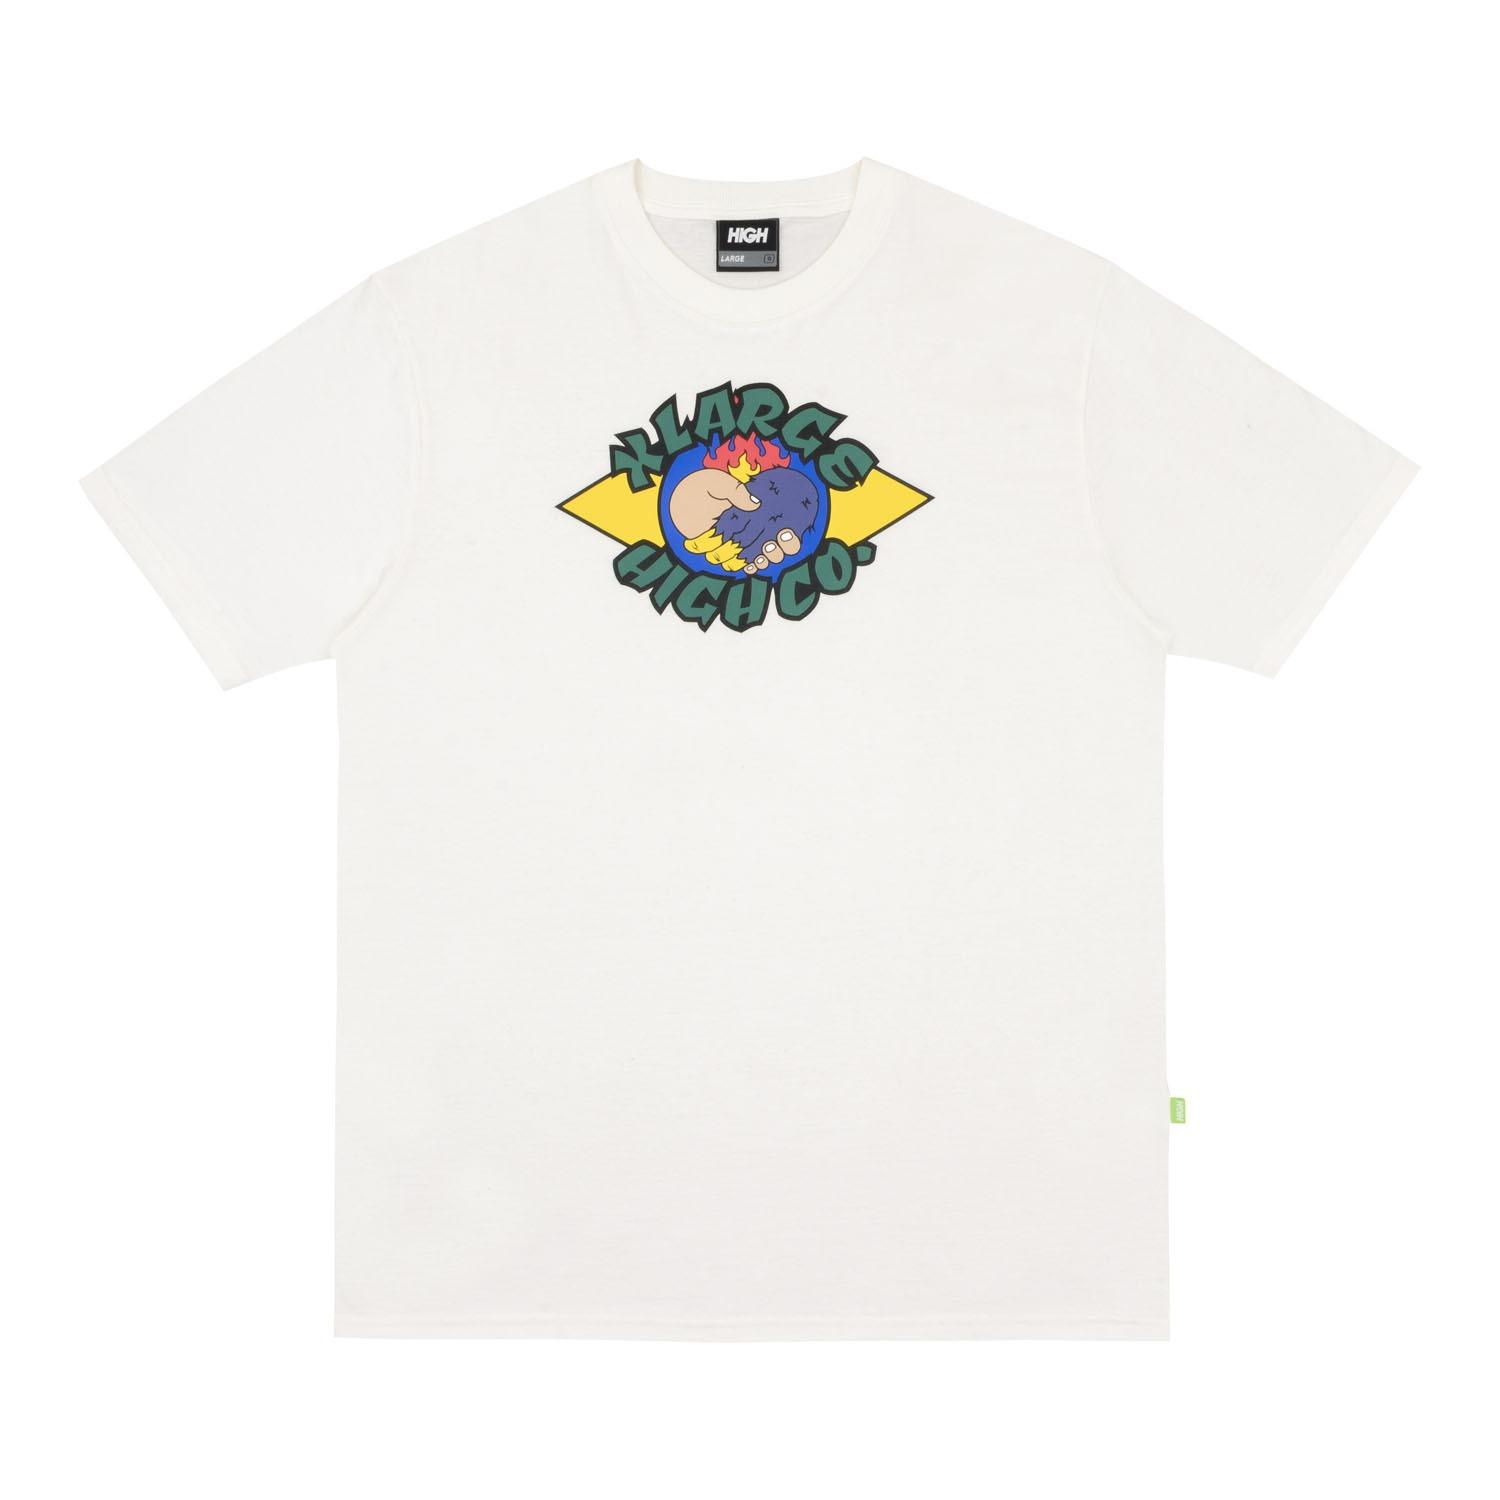 Camiseta High Company Tee BraXL White na Postal